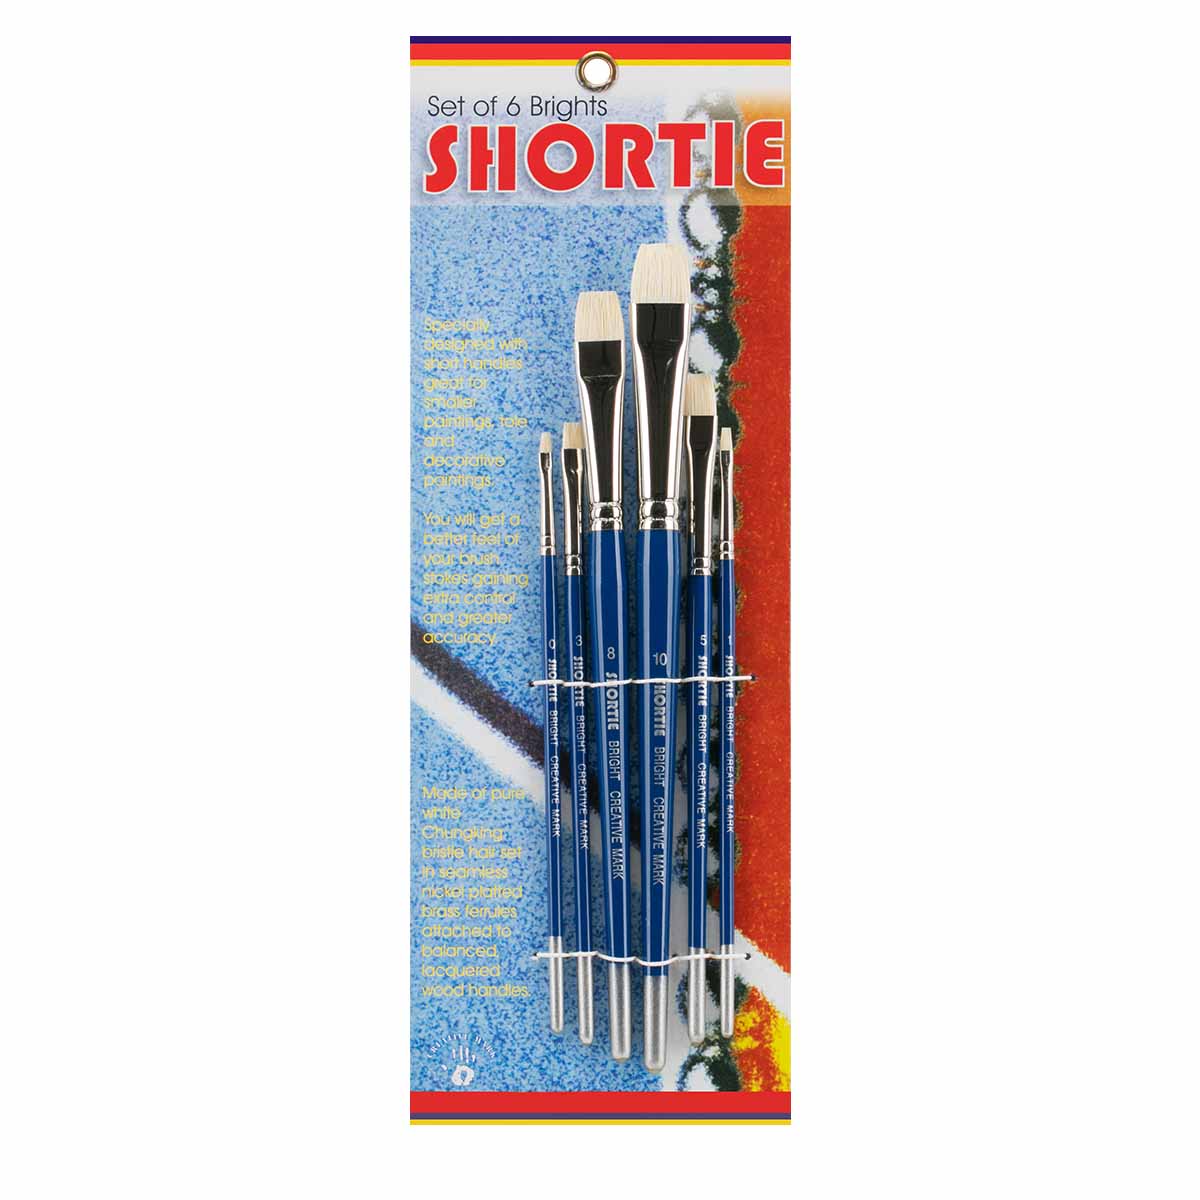 Creative Mark Shortie Bristle Brush Sets